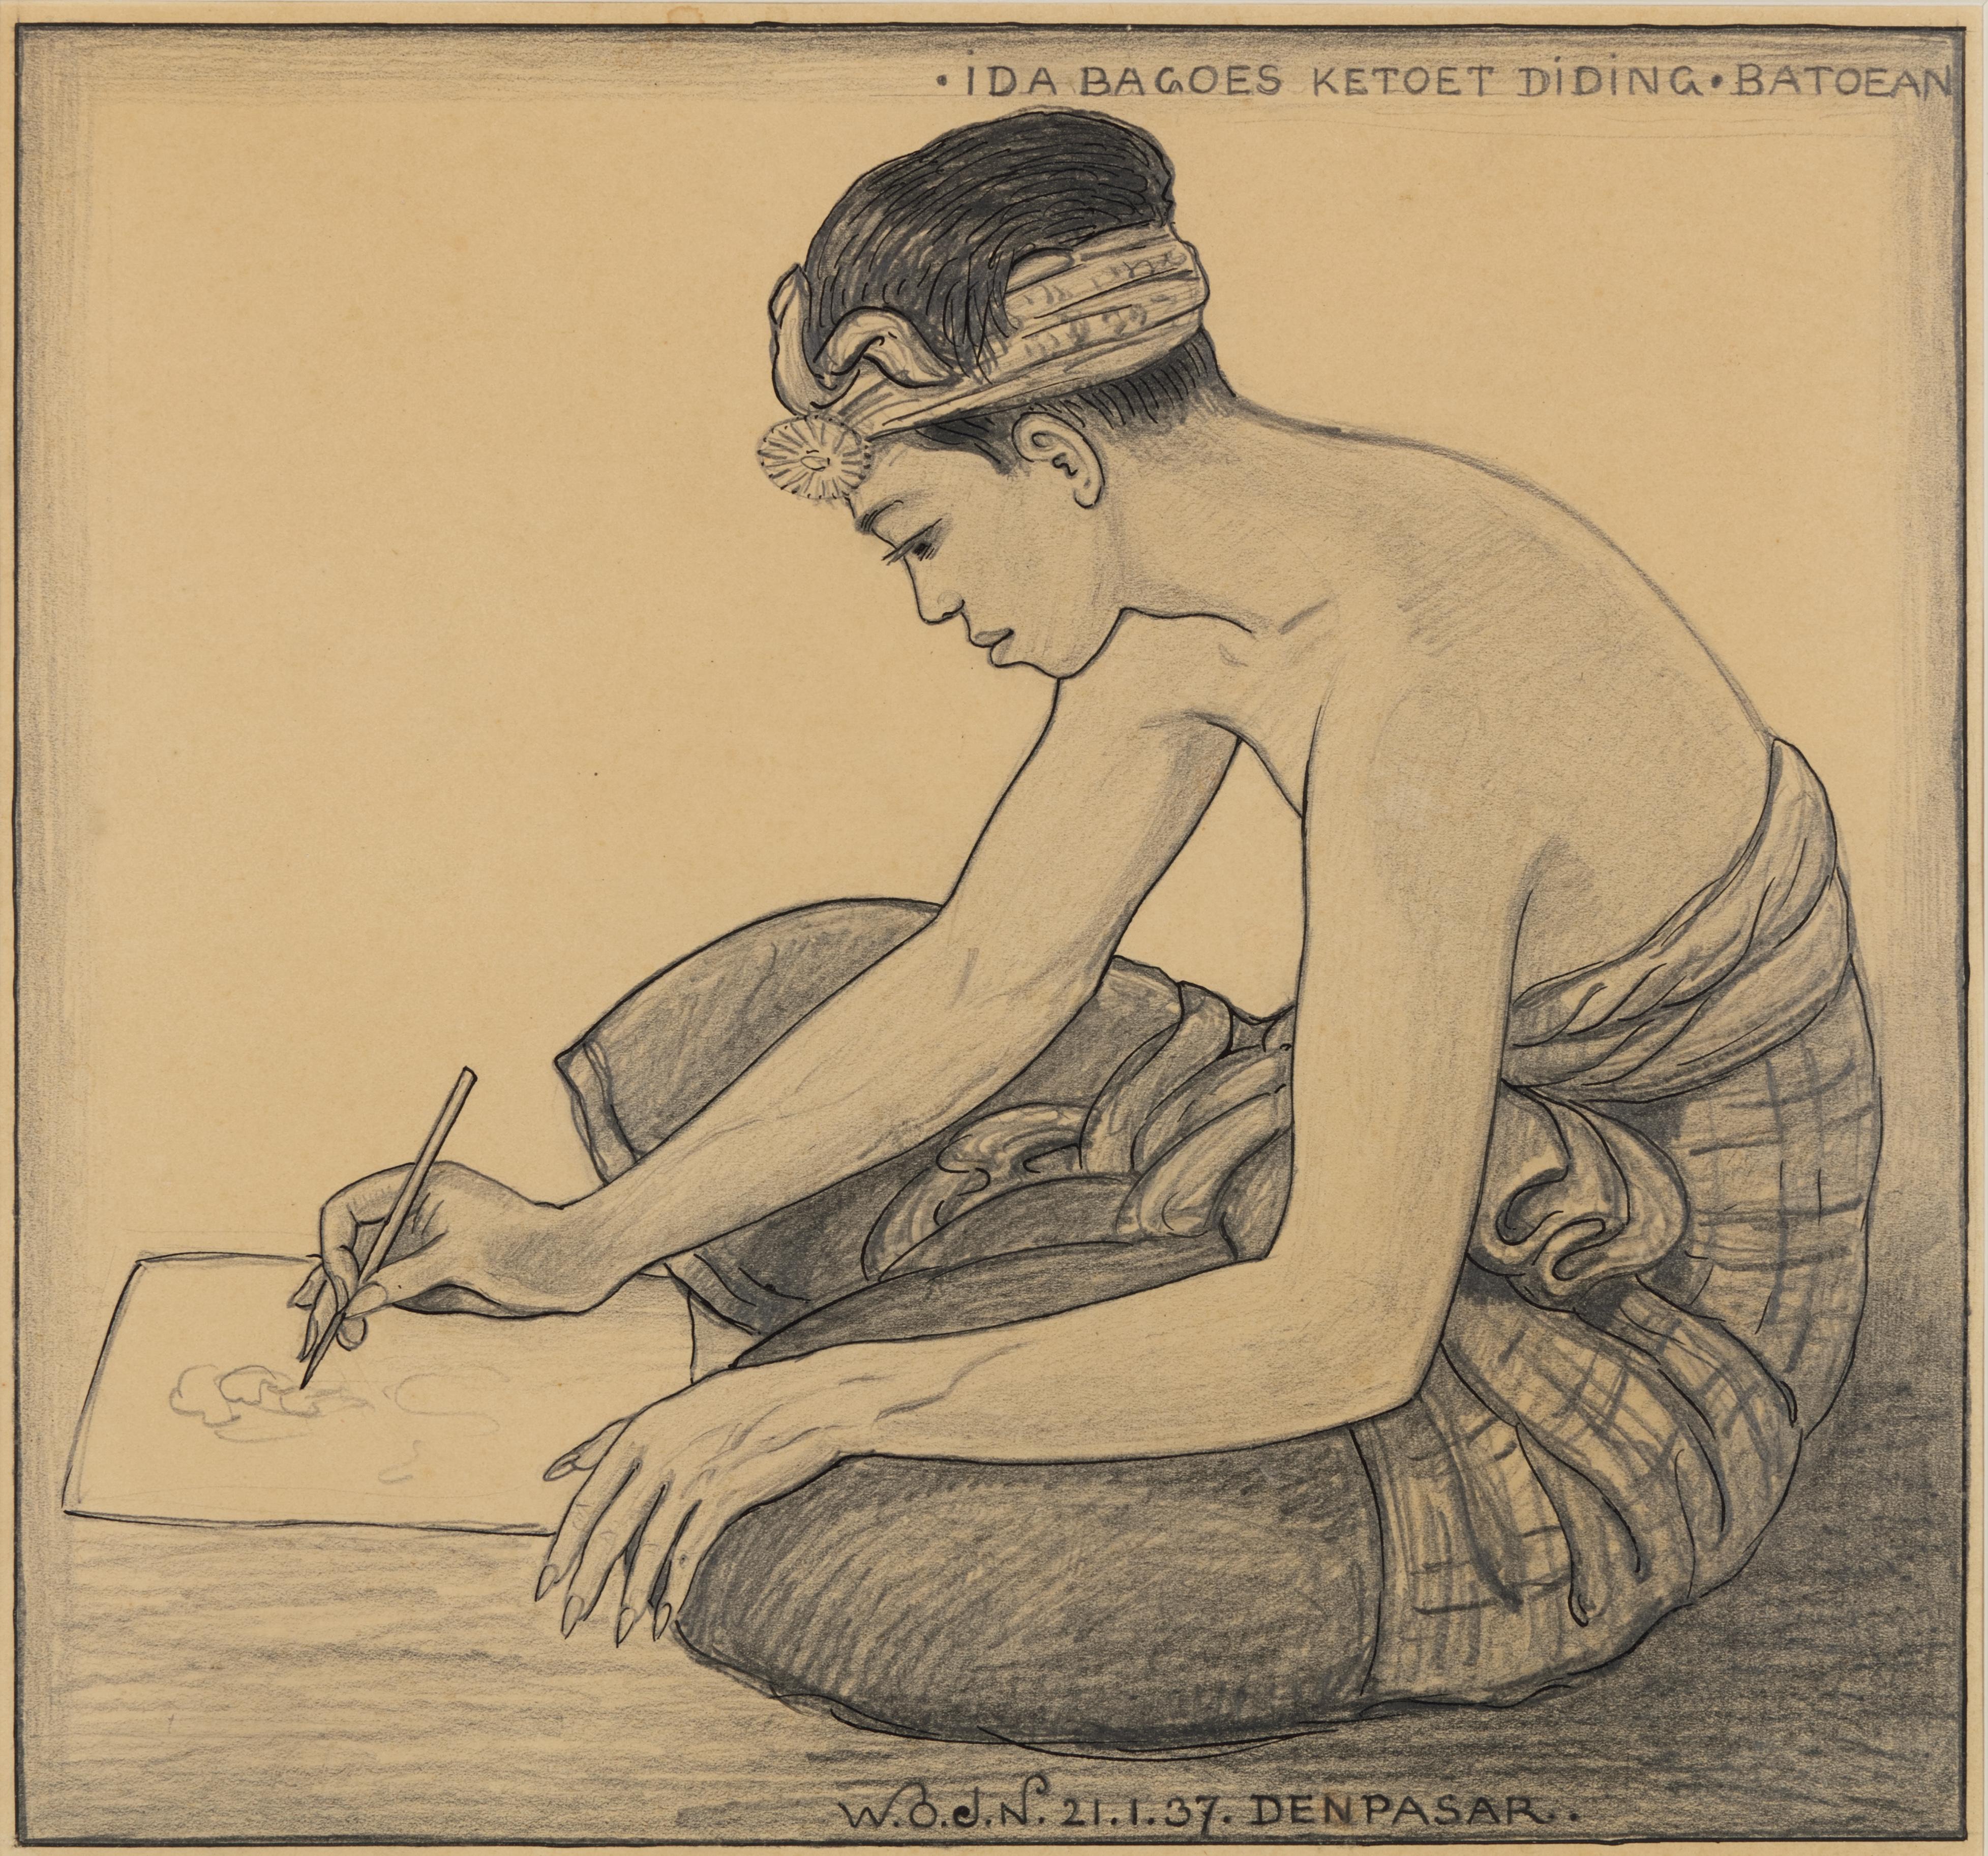 Portrait de l'artiste Ida Bagoes Ketut Diding, Bali, 1937